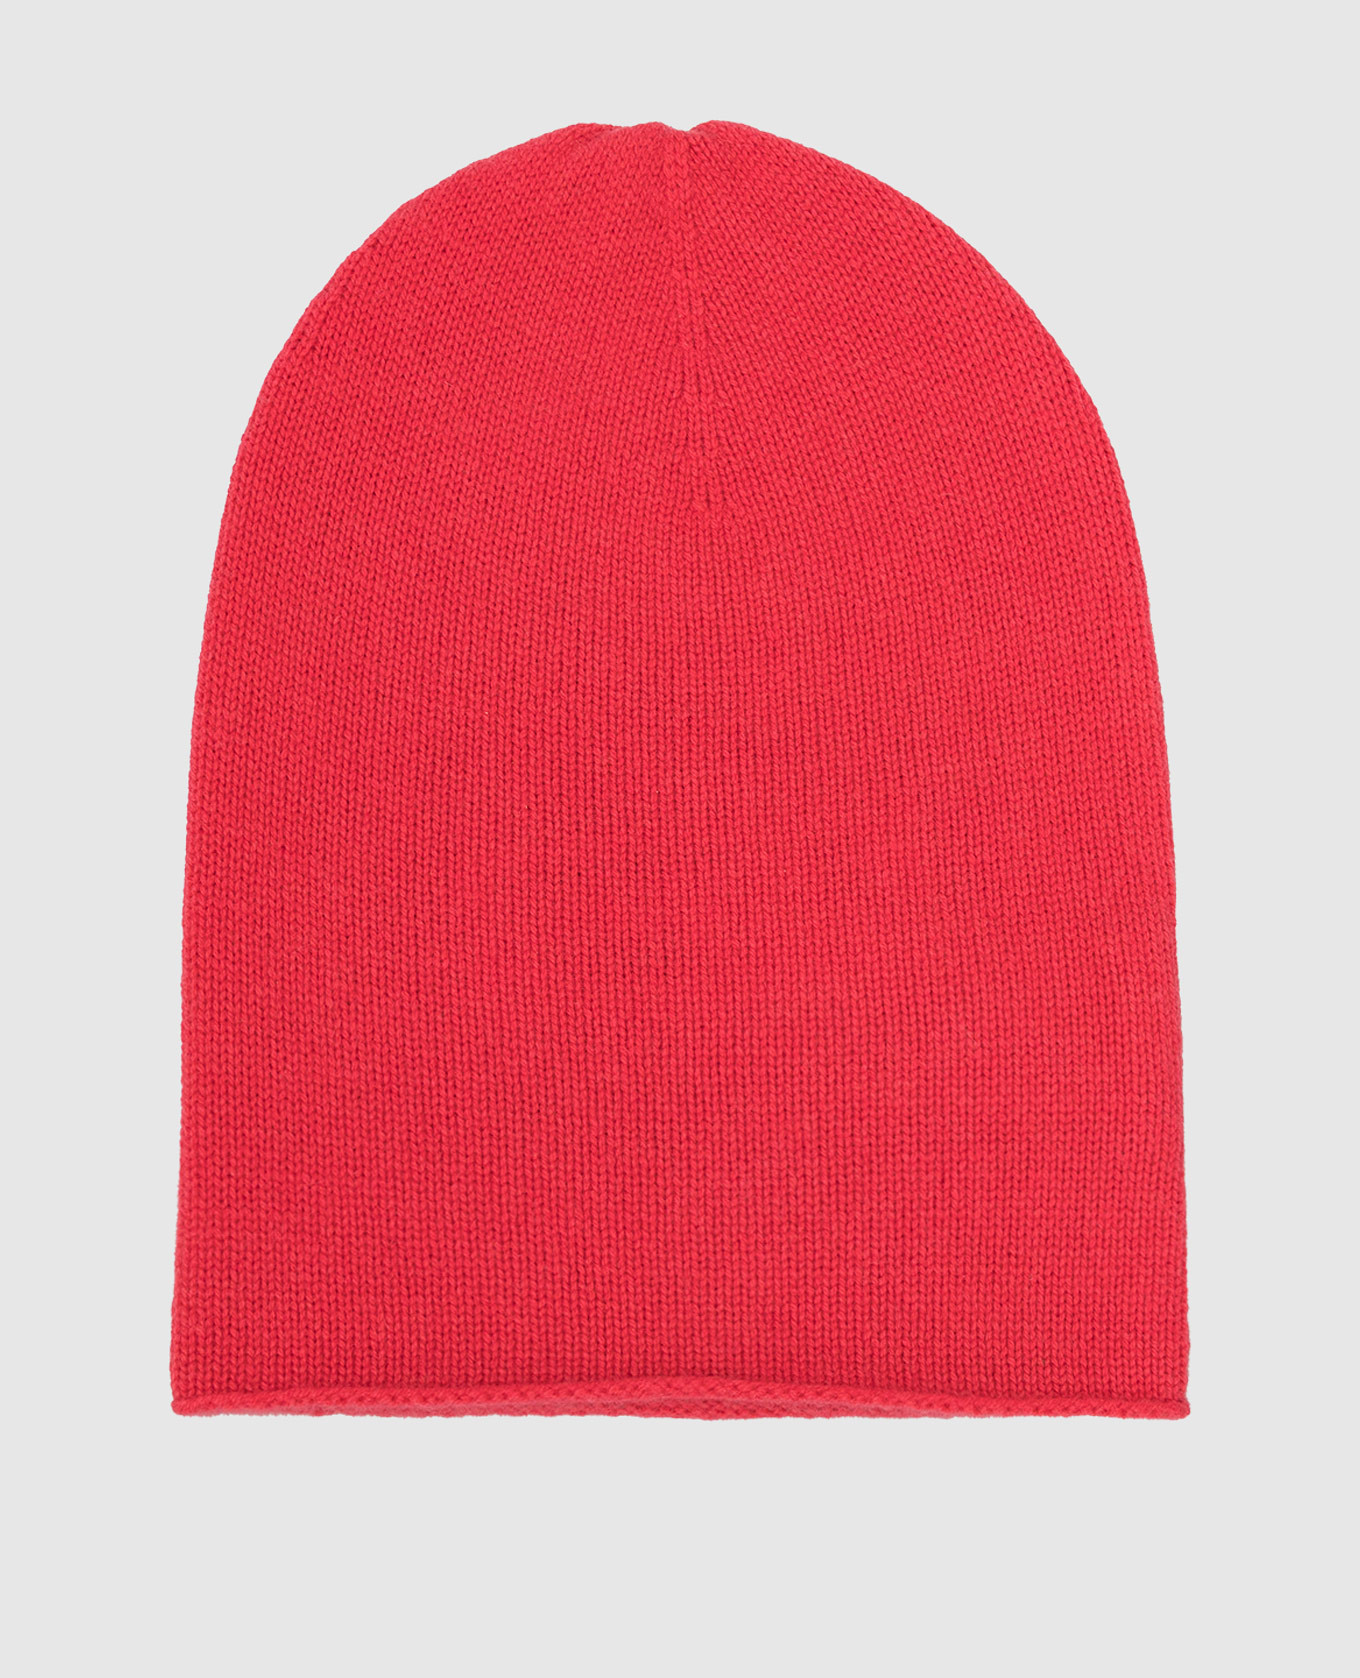 Raspberry cashmere hat